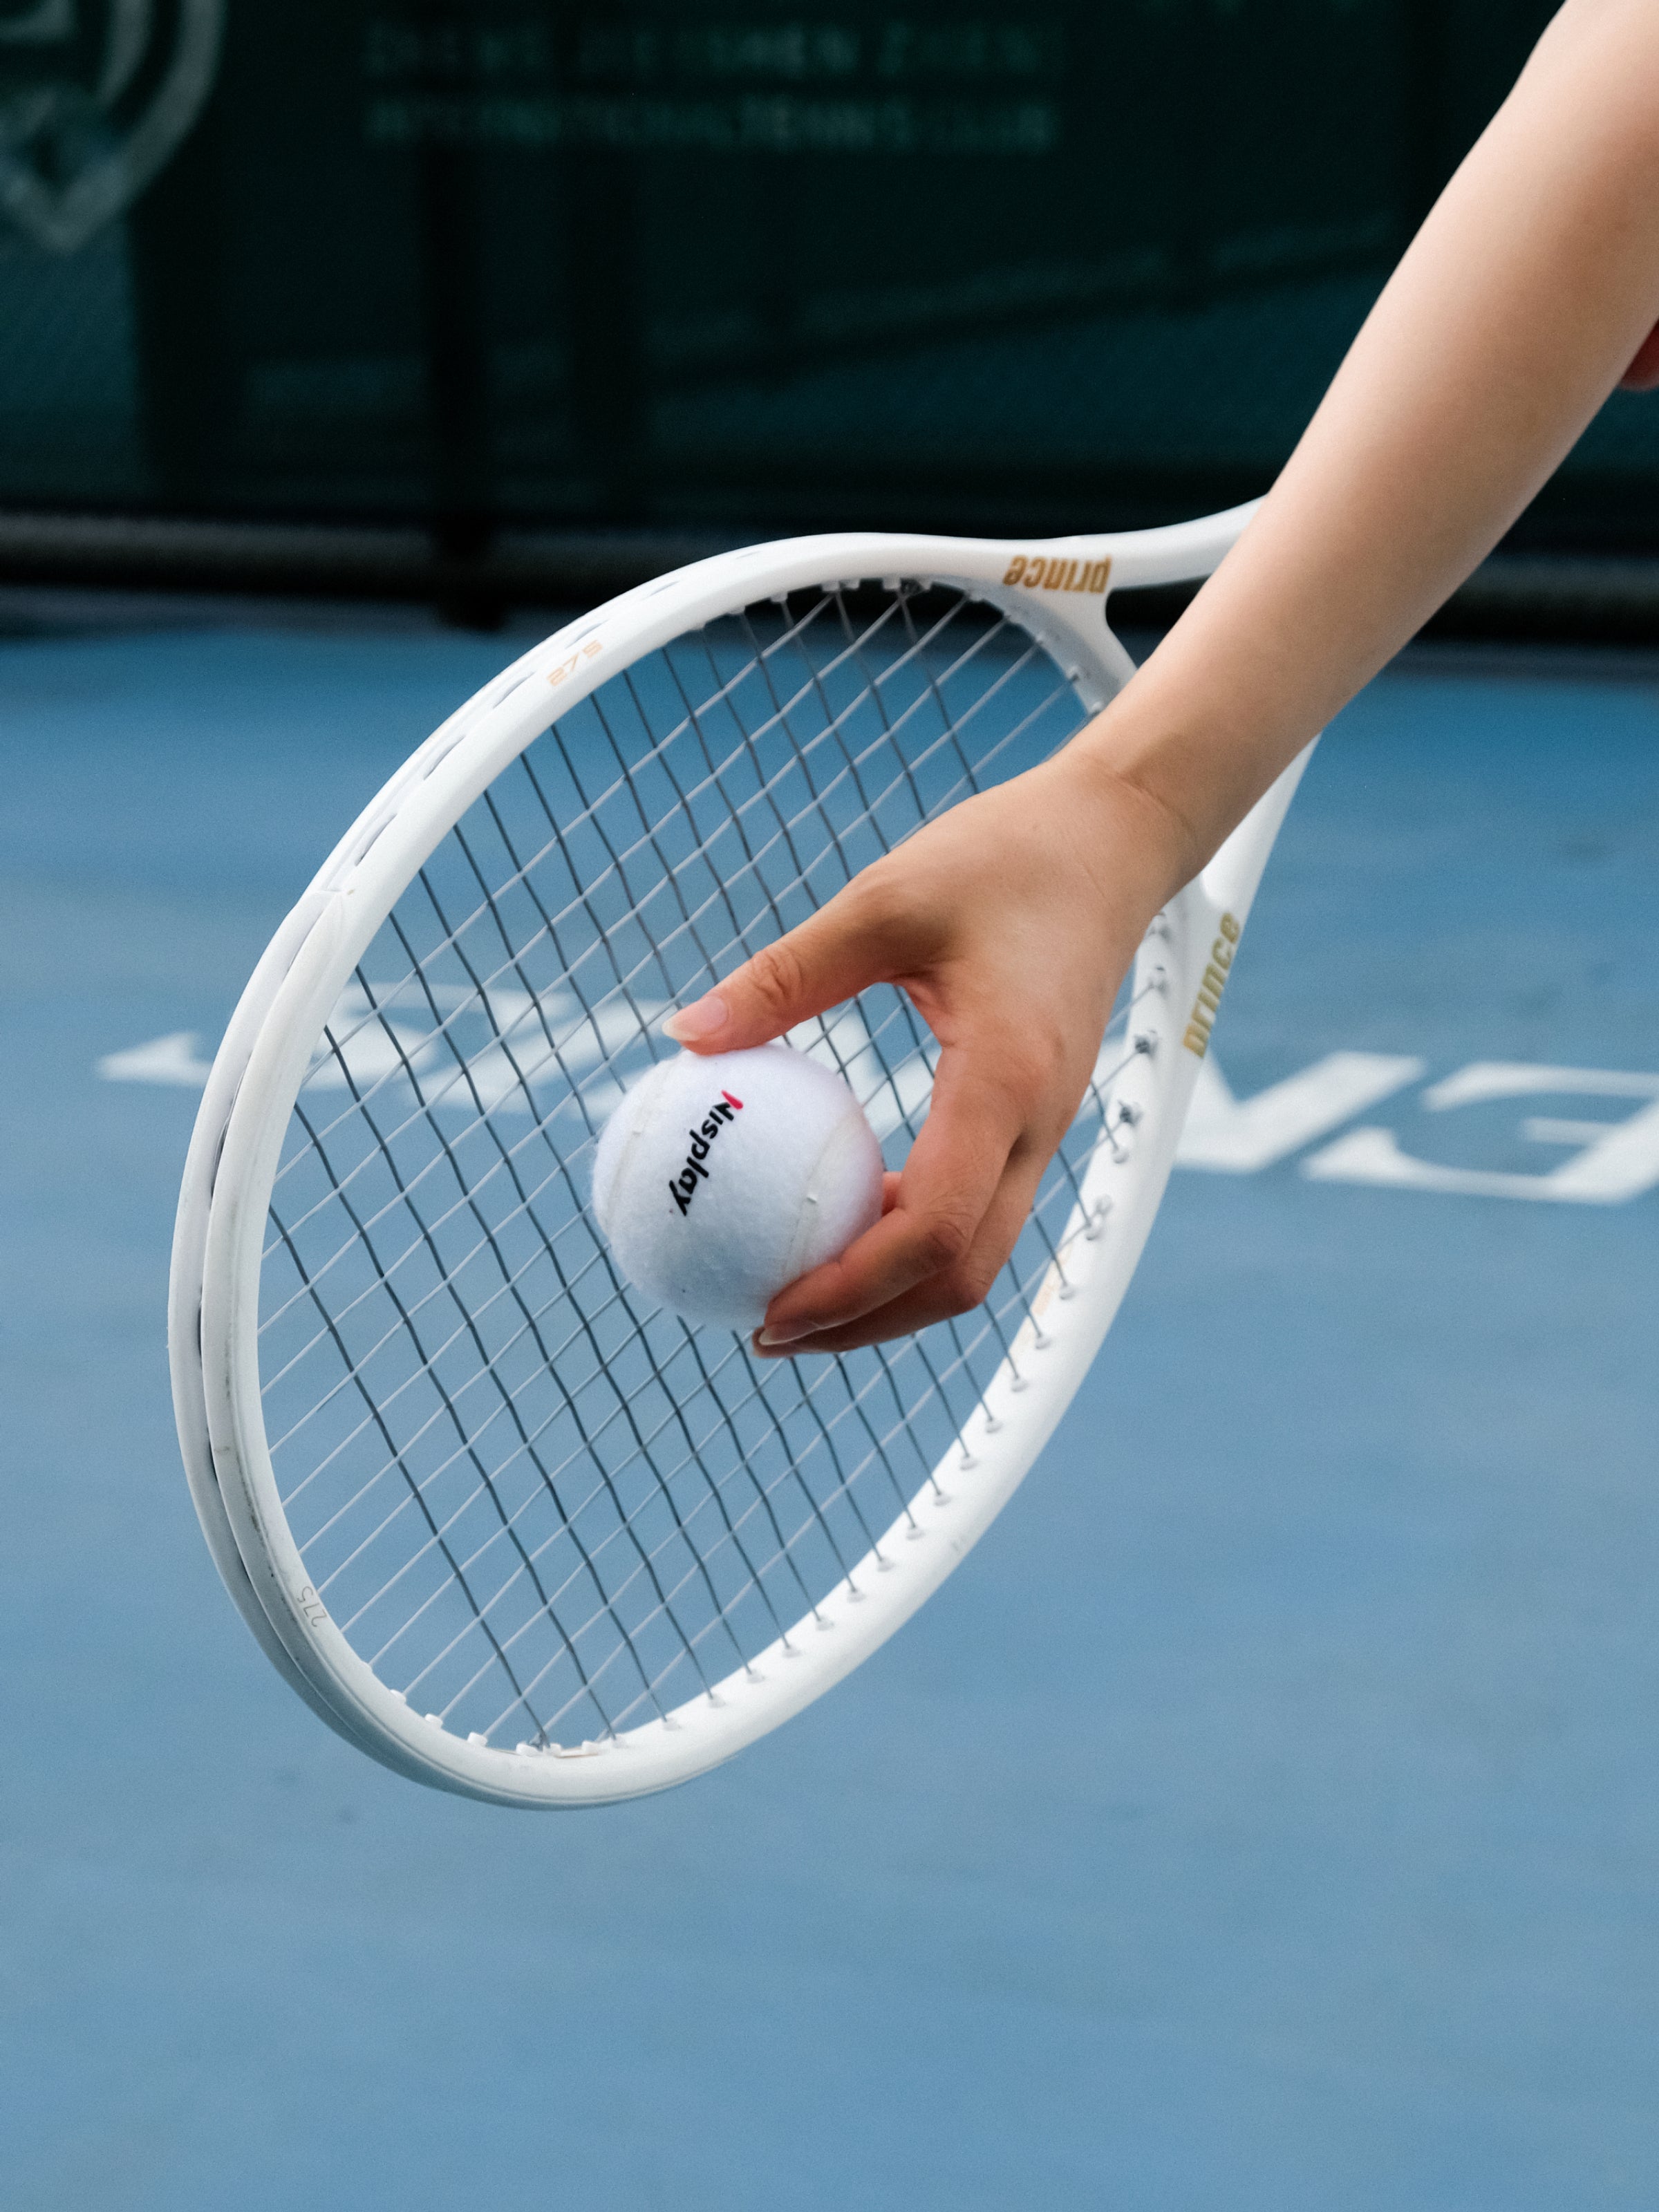 Tennis Ball, Tennis Training Ball Rebound Ball with 4M Elastic